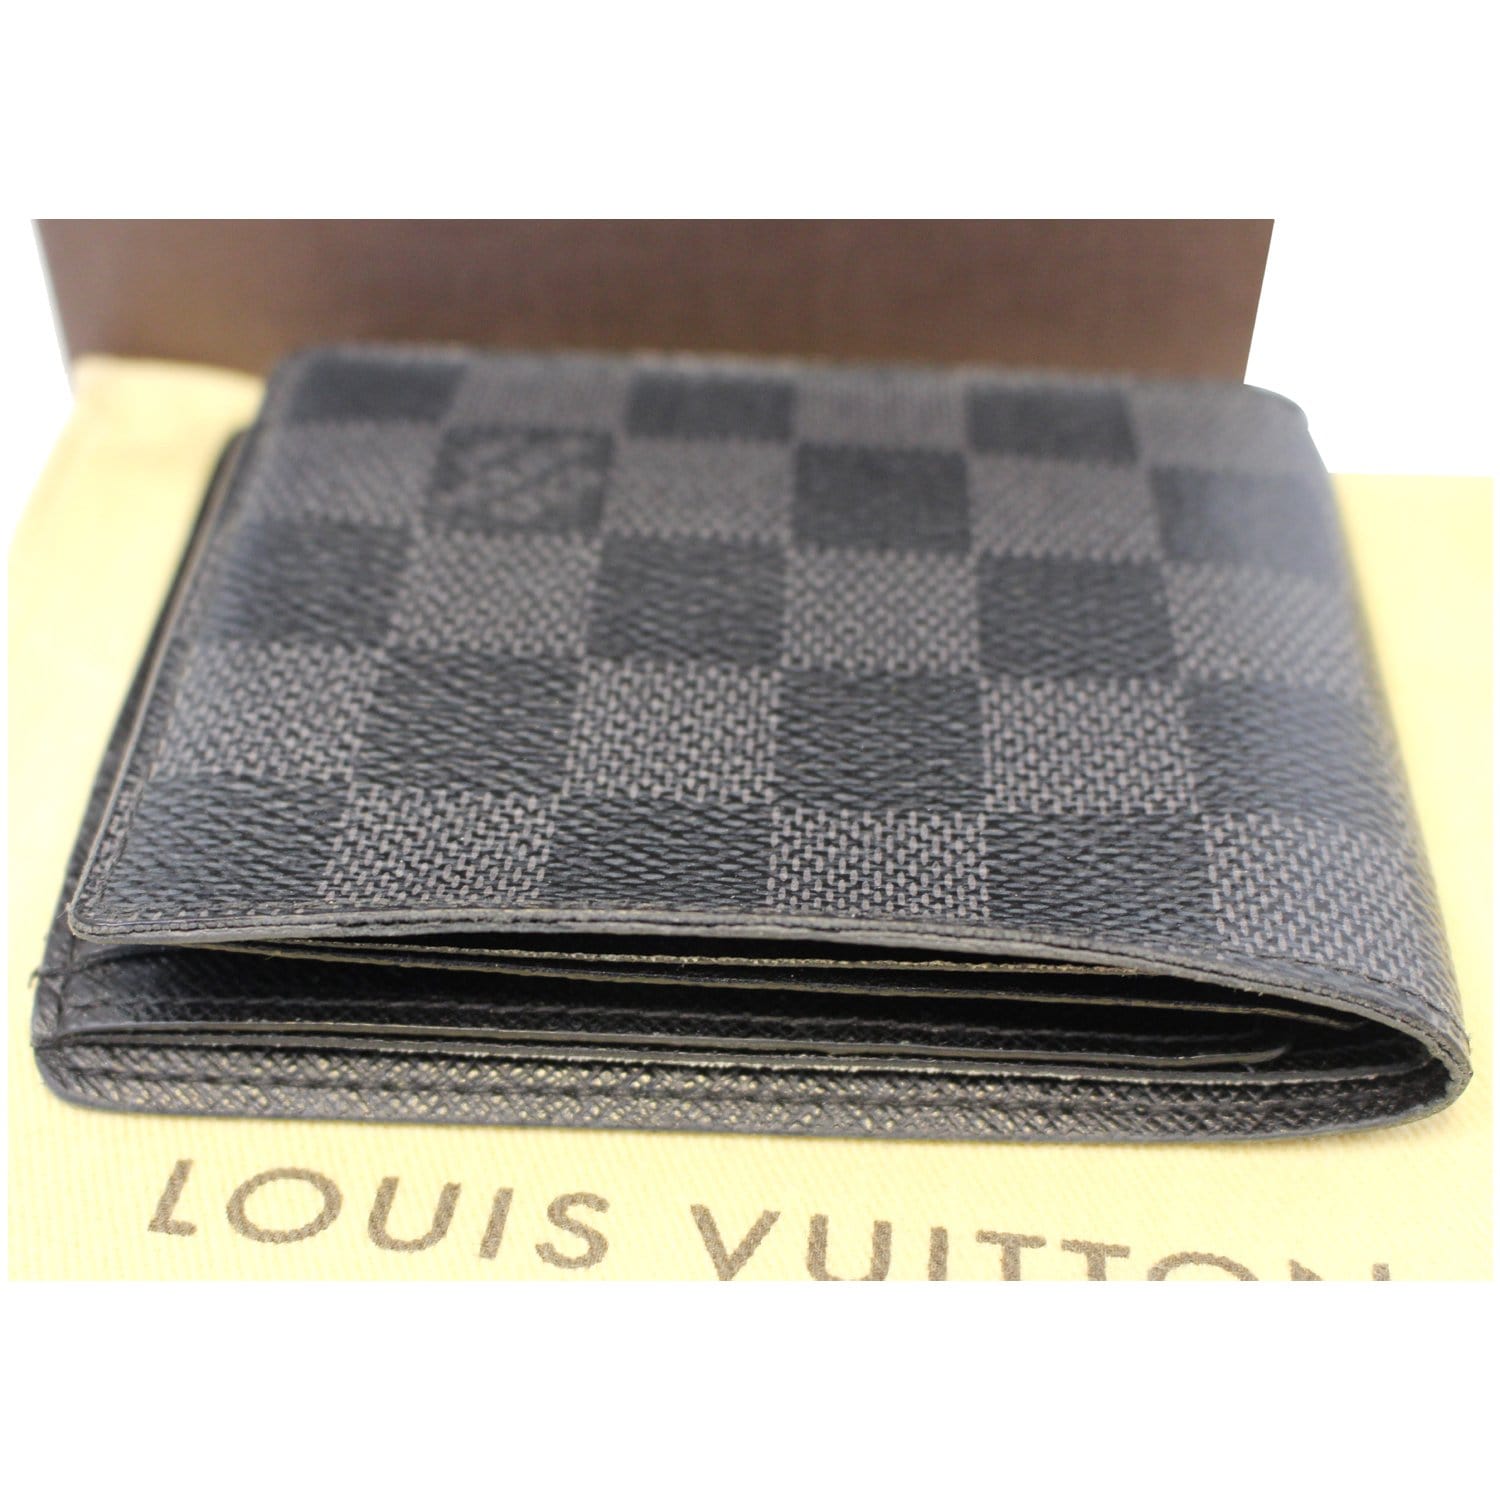 LOUIS VUITTON Multiple Wallet in Damier Graphite - 💯 AUTHENTIC - N62663